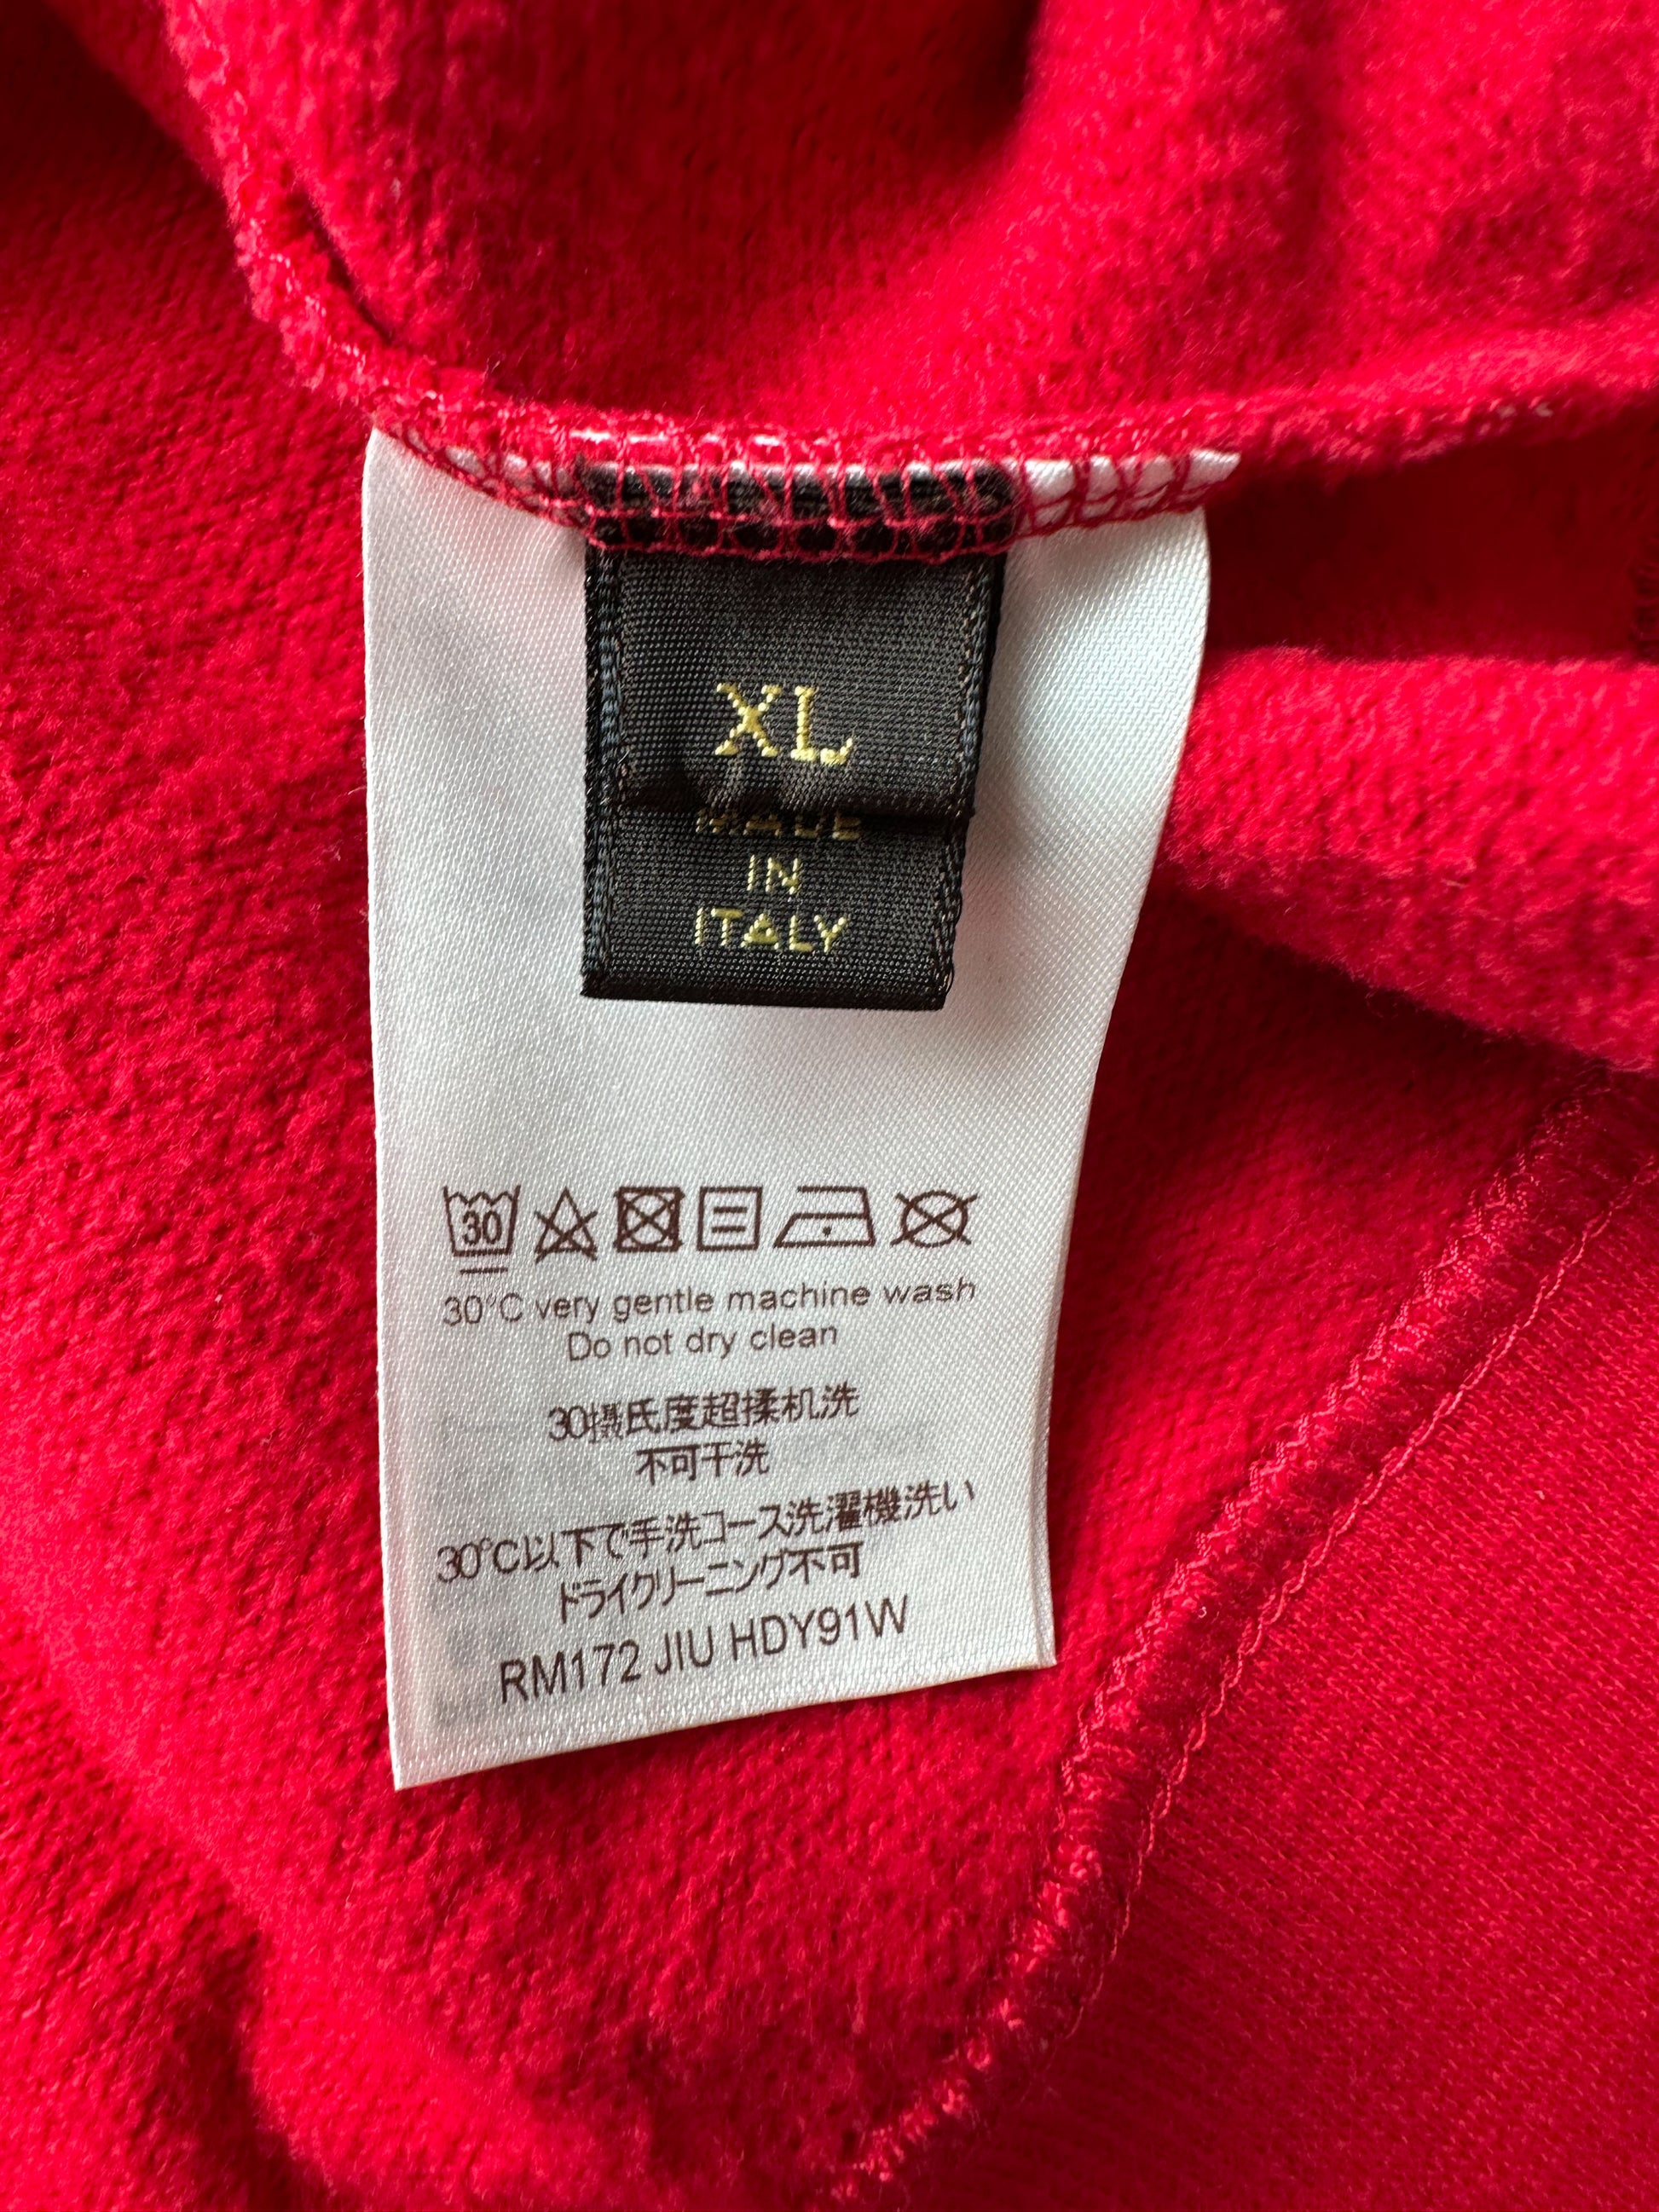 Louis Vuitton x Supreme 2017 Monogram Box Logo Hoodie - Red Sweatshirts &  Hoodies, Clothing - LOUSU20747